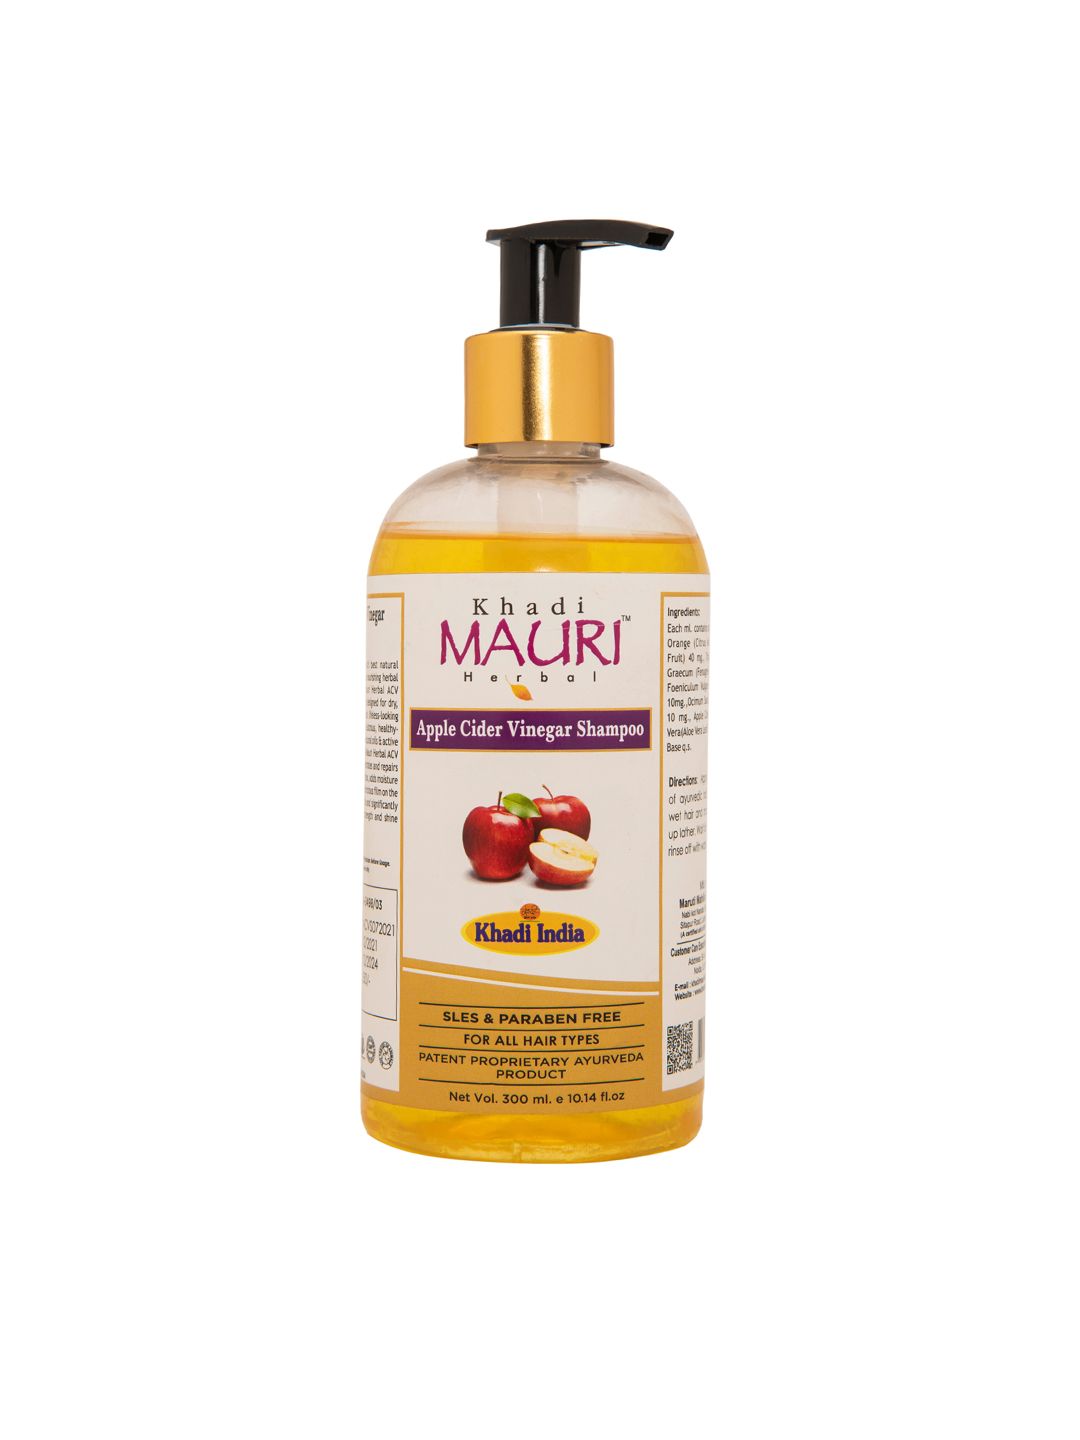 Khadi Mauri Herbal Apple Cider Vinegar Shampoo for All Hair Types - 300ml Price in India